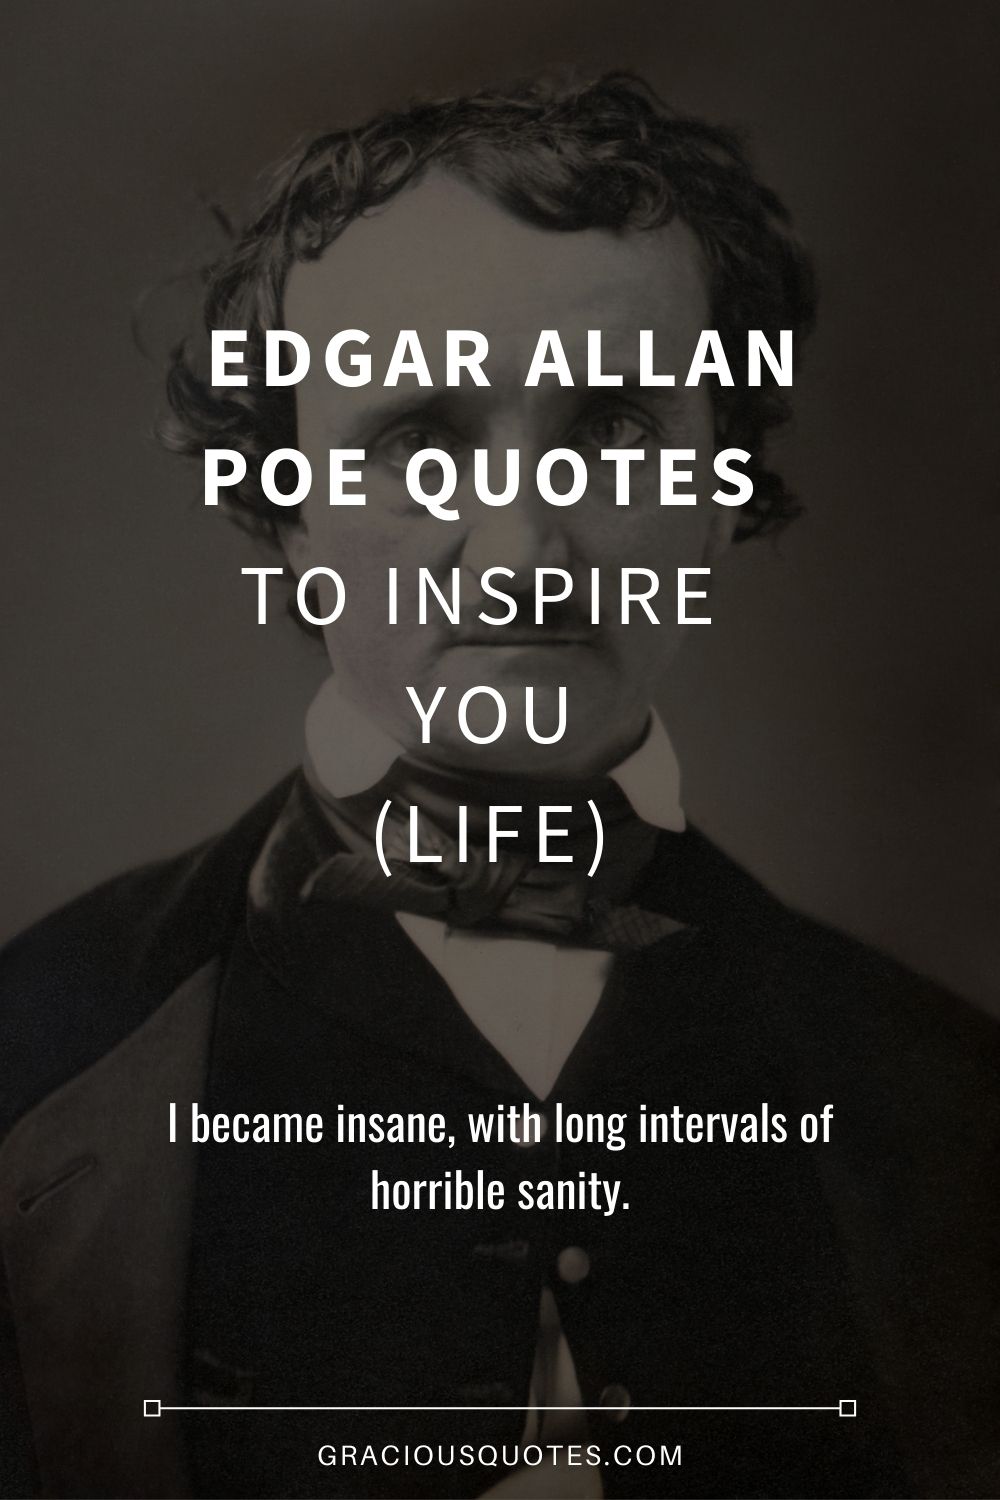 Edgar Allan Poe Quotes to Inspire You (LIFE) - Gracious Quotes